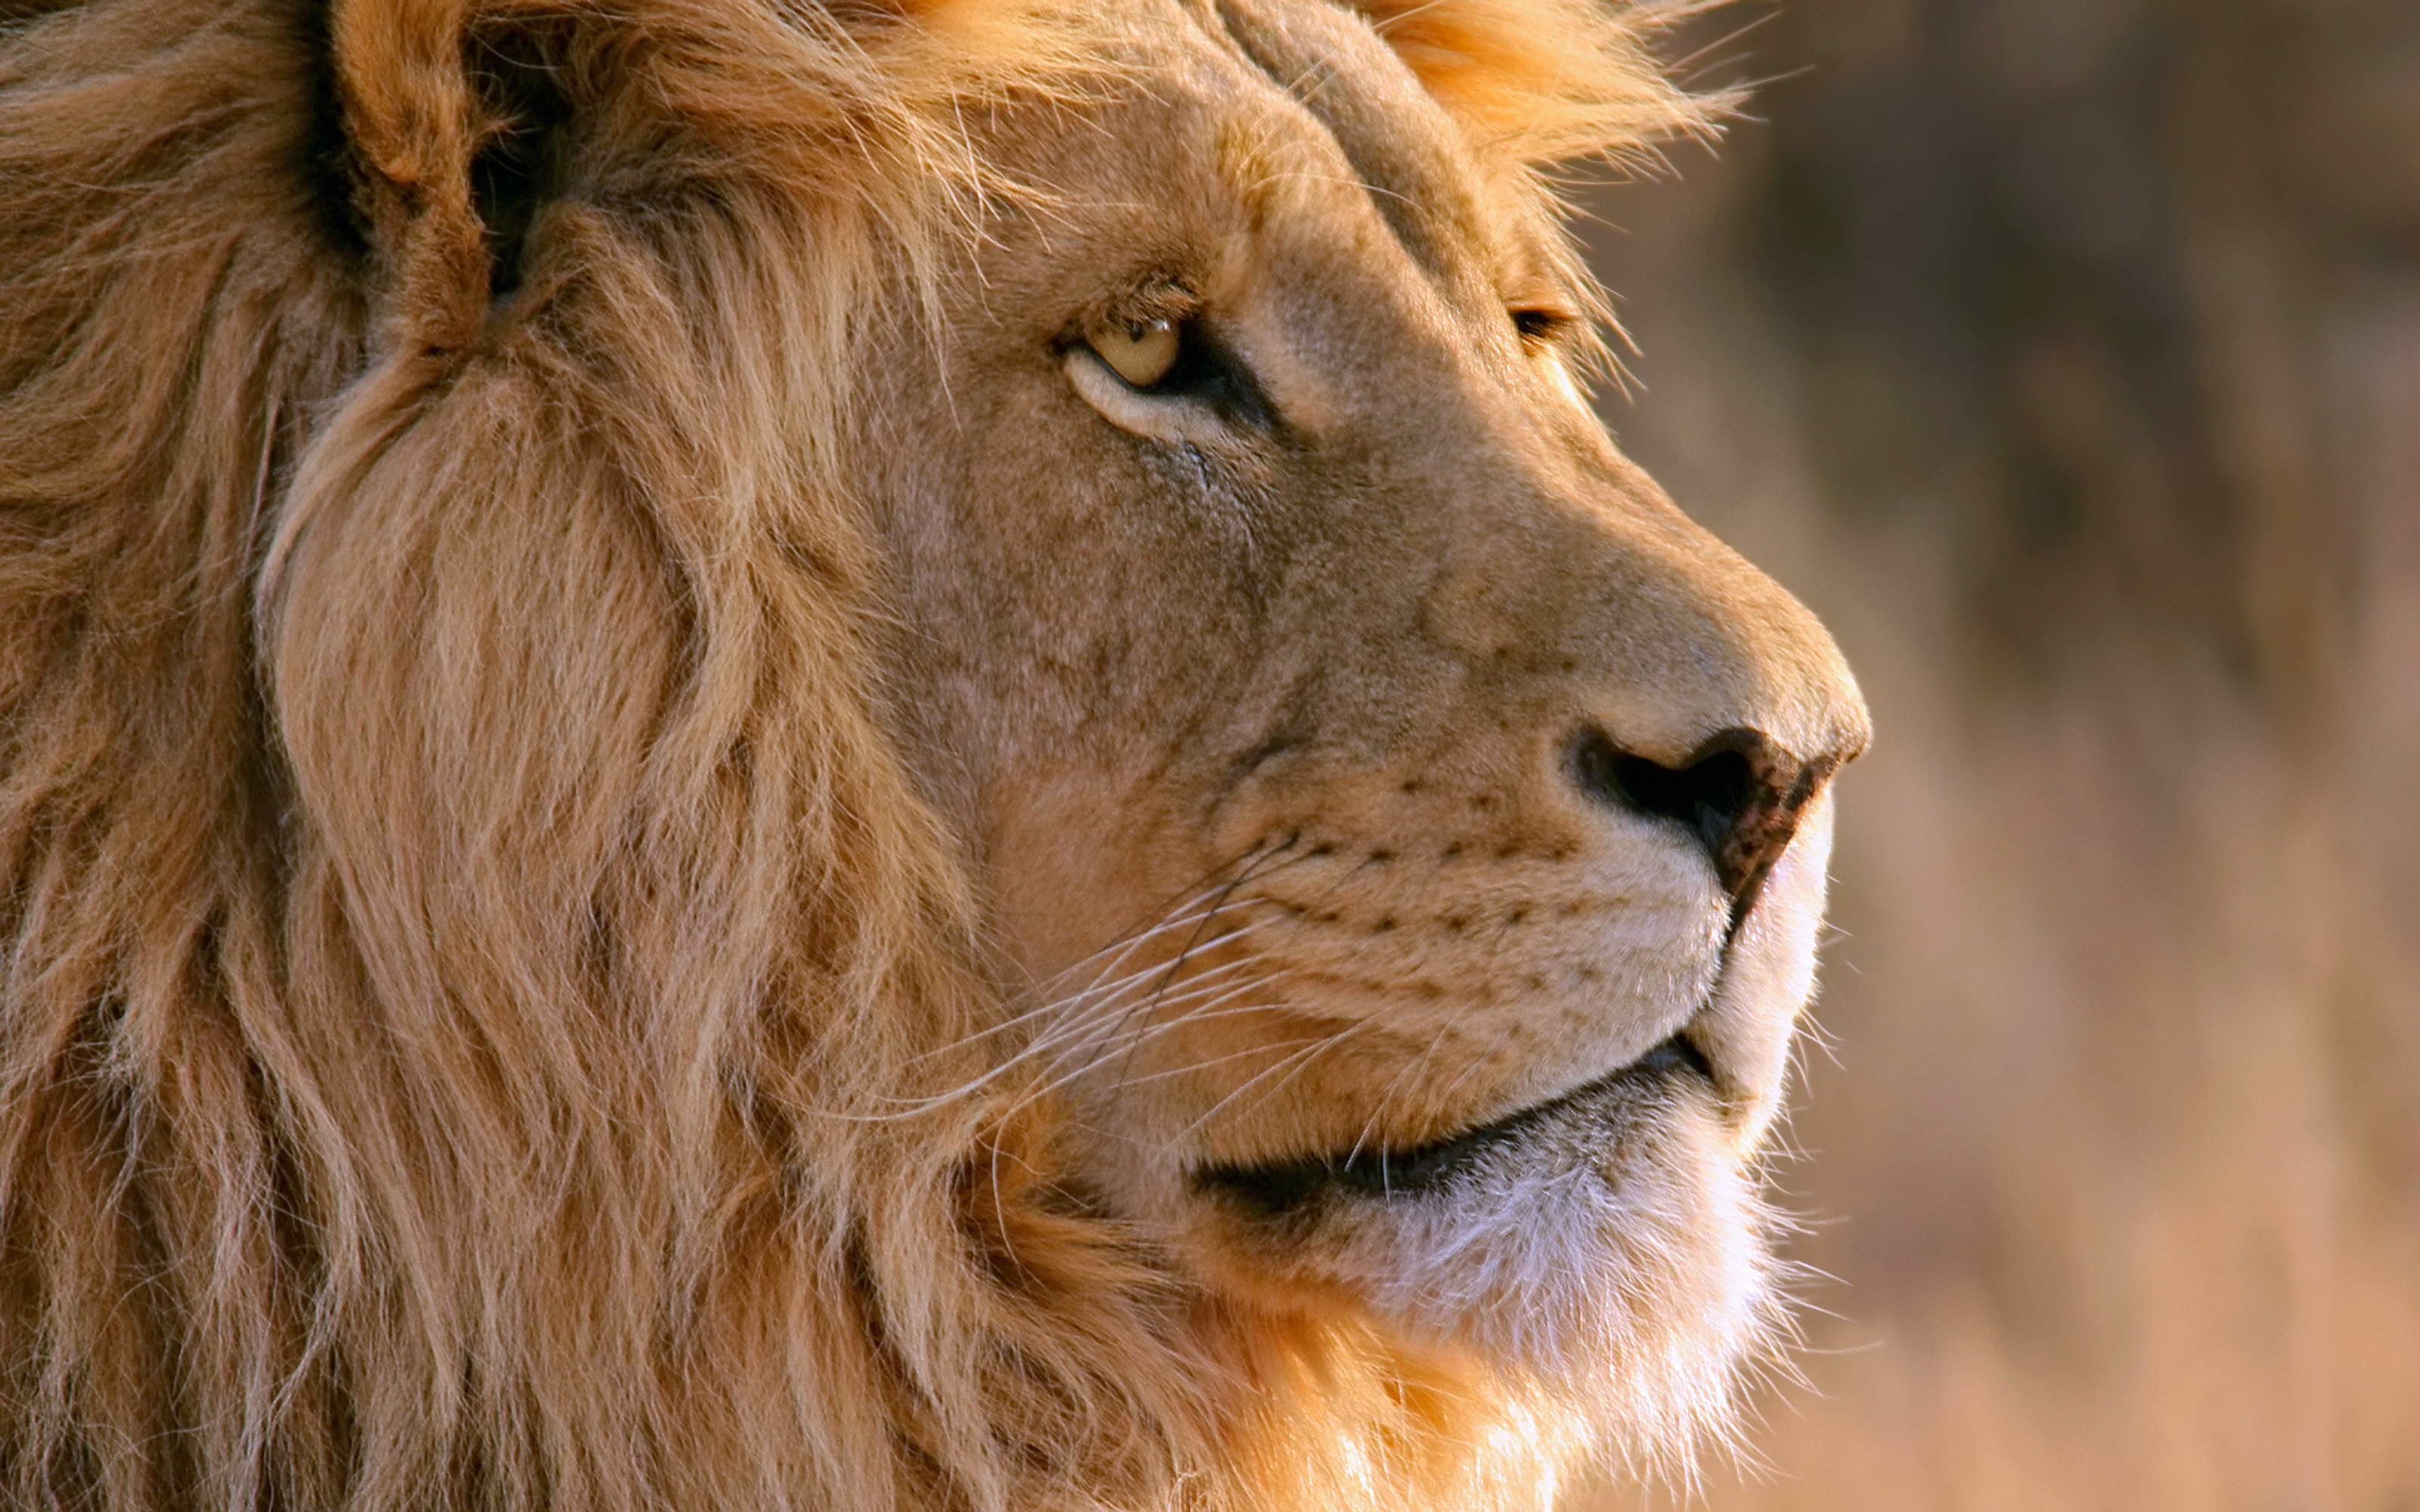 130843 descargar imagen león, un leon, animales, bozal, depredador, melena: fondos de pantalla y protectores de pantalla gratis